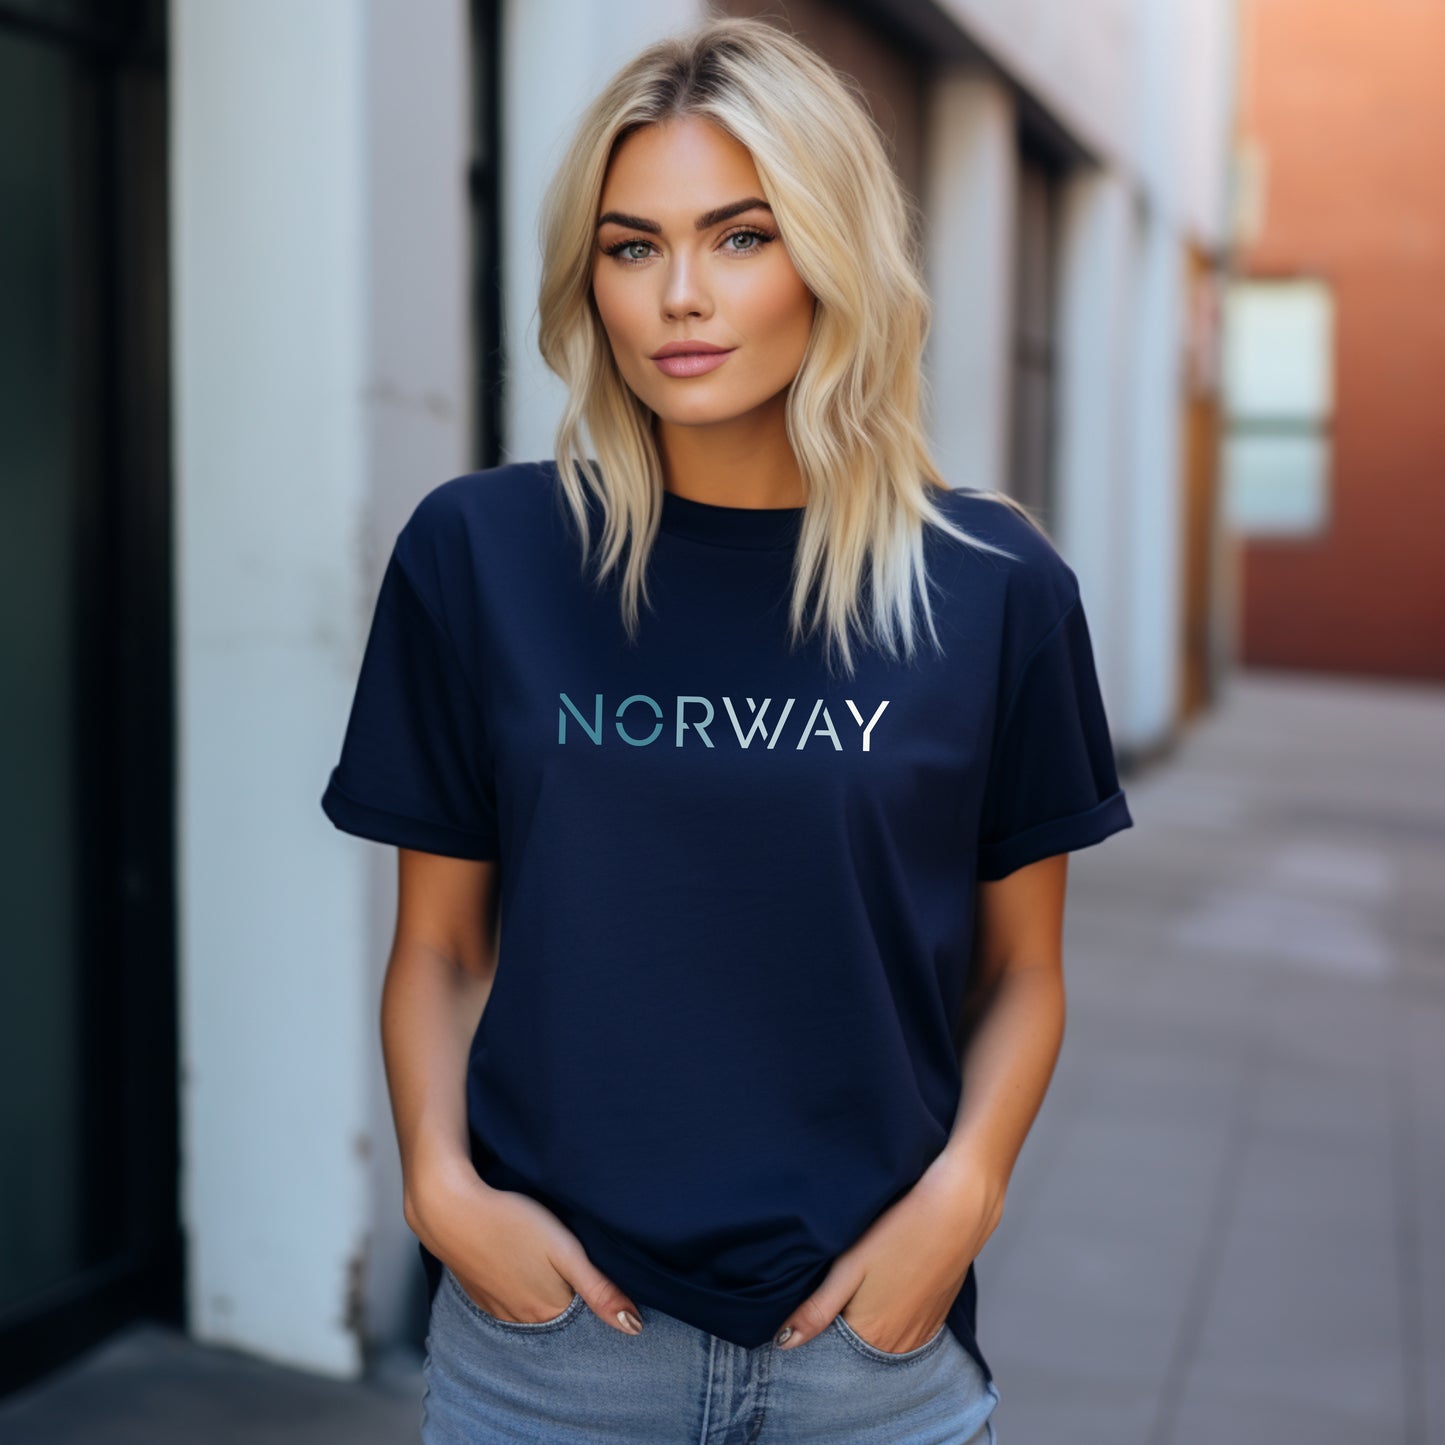 Norway T-shirt Norwegian Shirt Norway Tee Norwegian Gift from Norway Souvenir